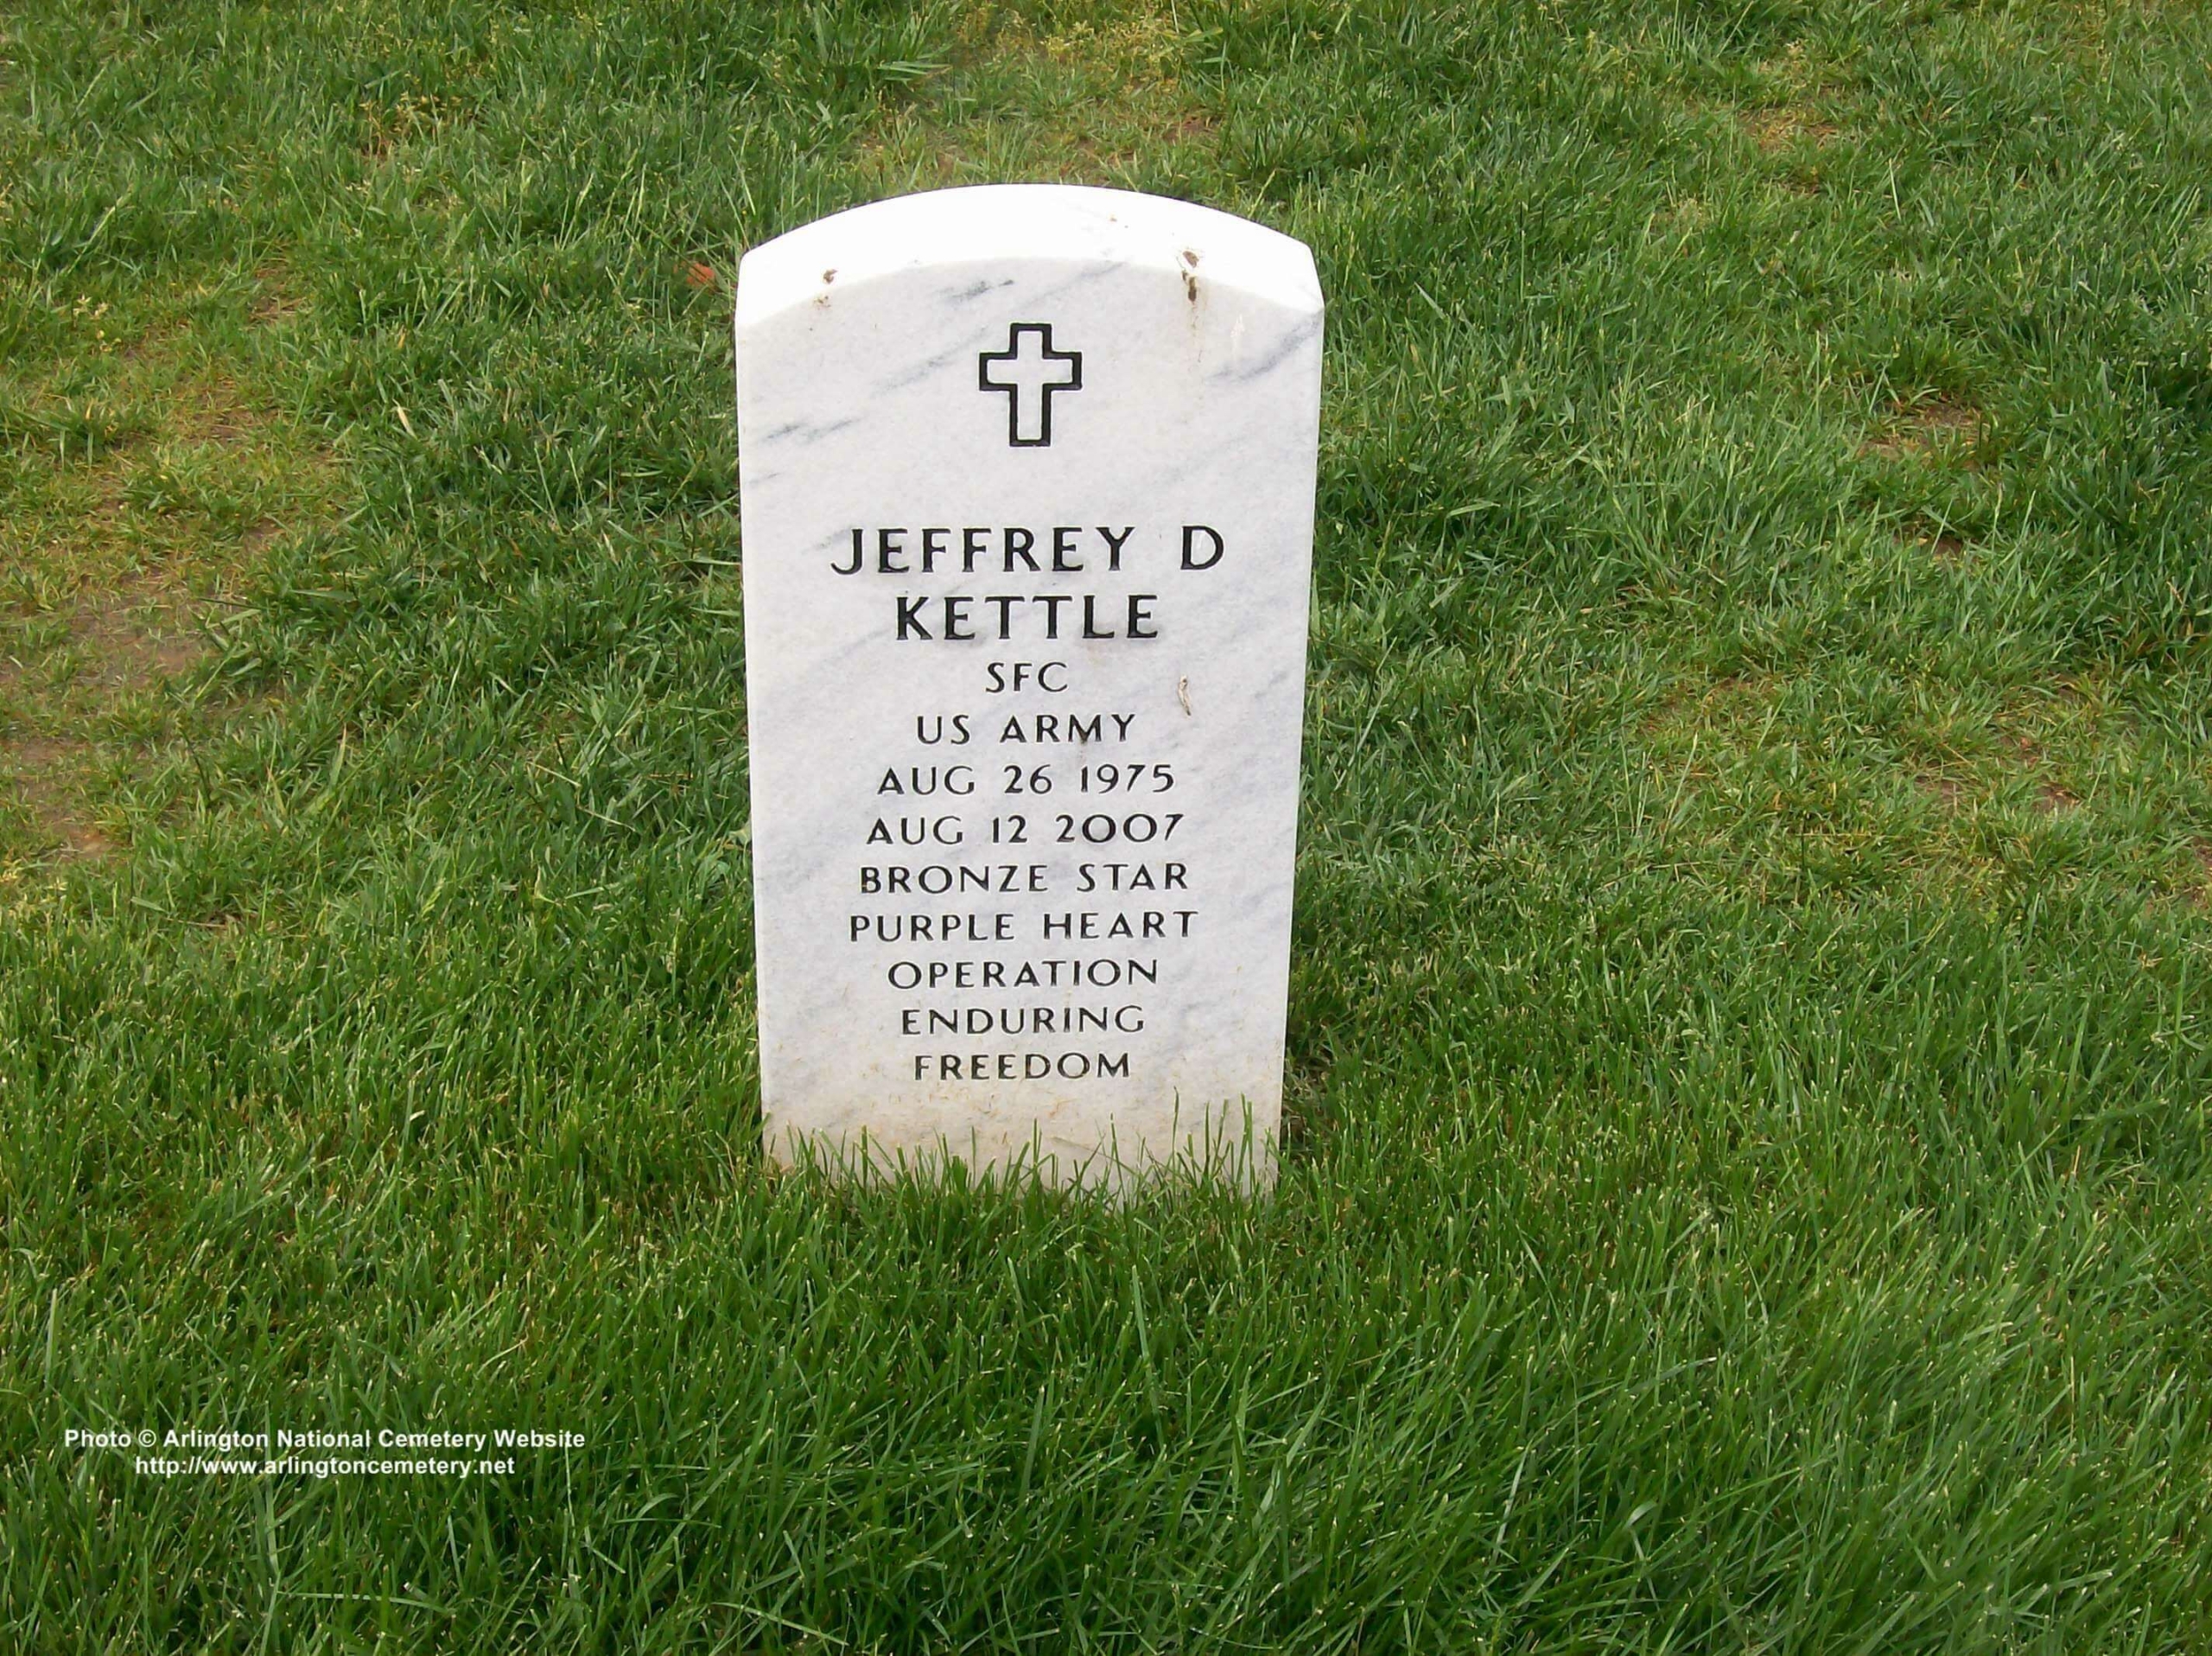 jdkettle-gravesite-photo-may-2008-001